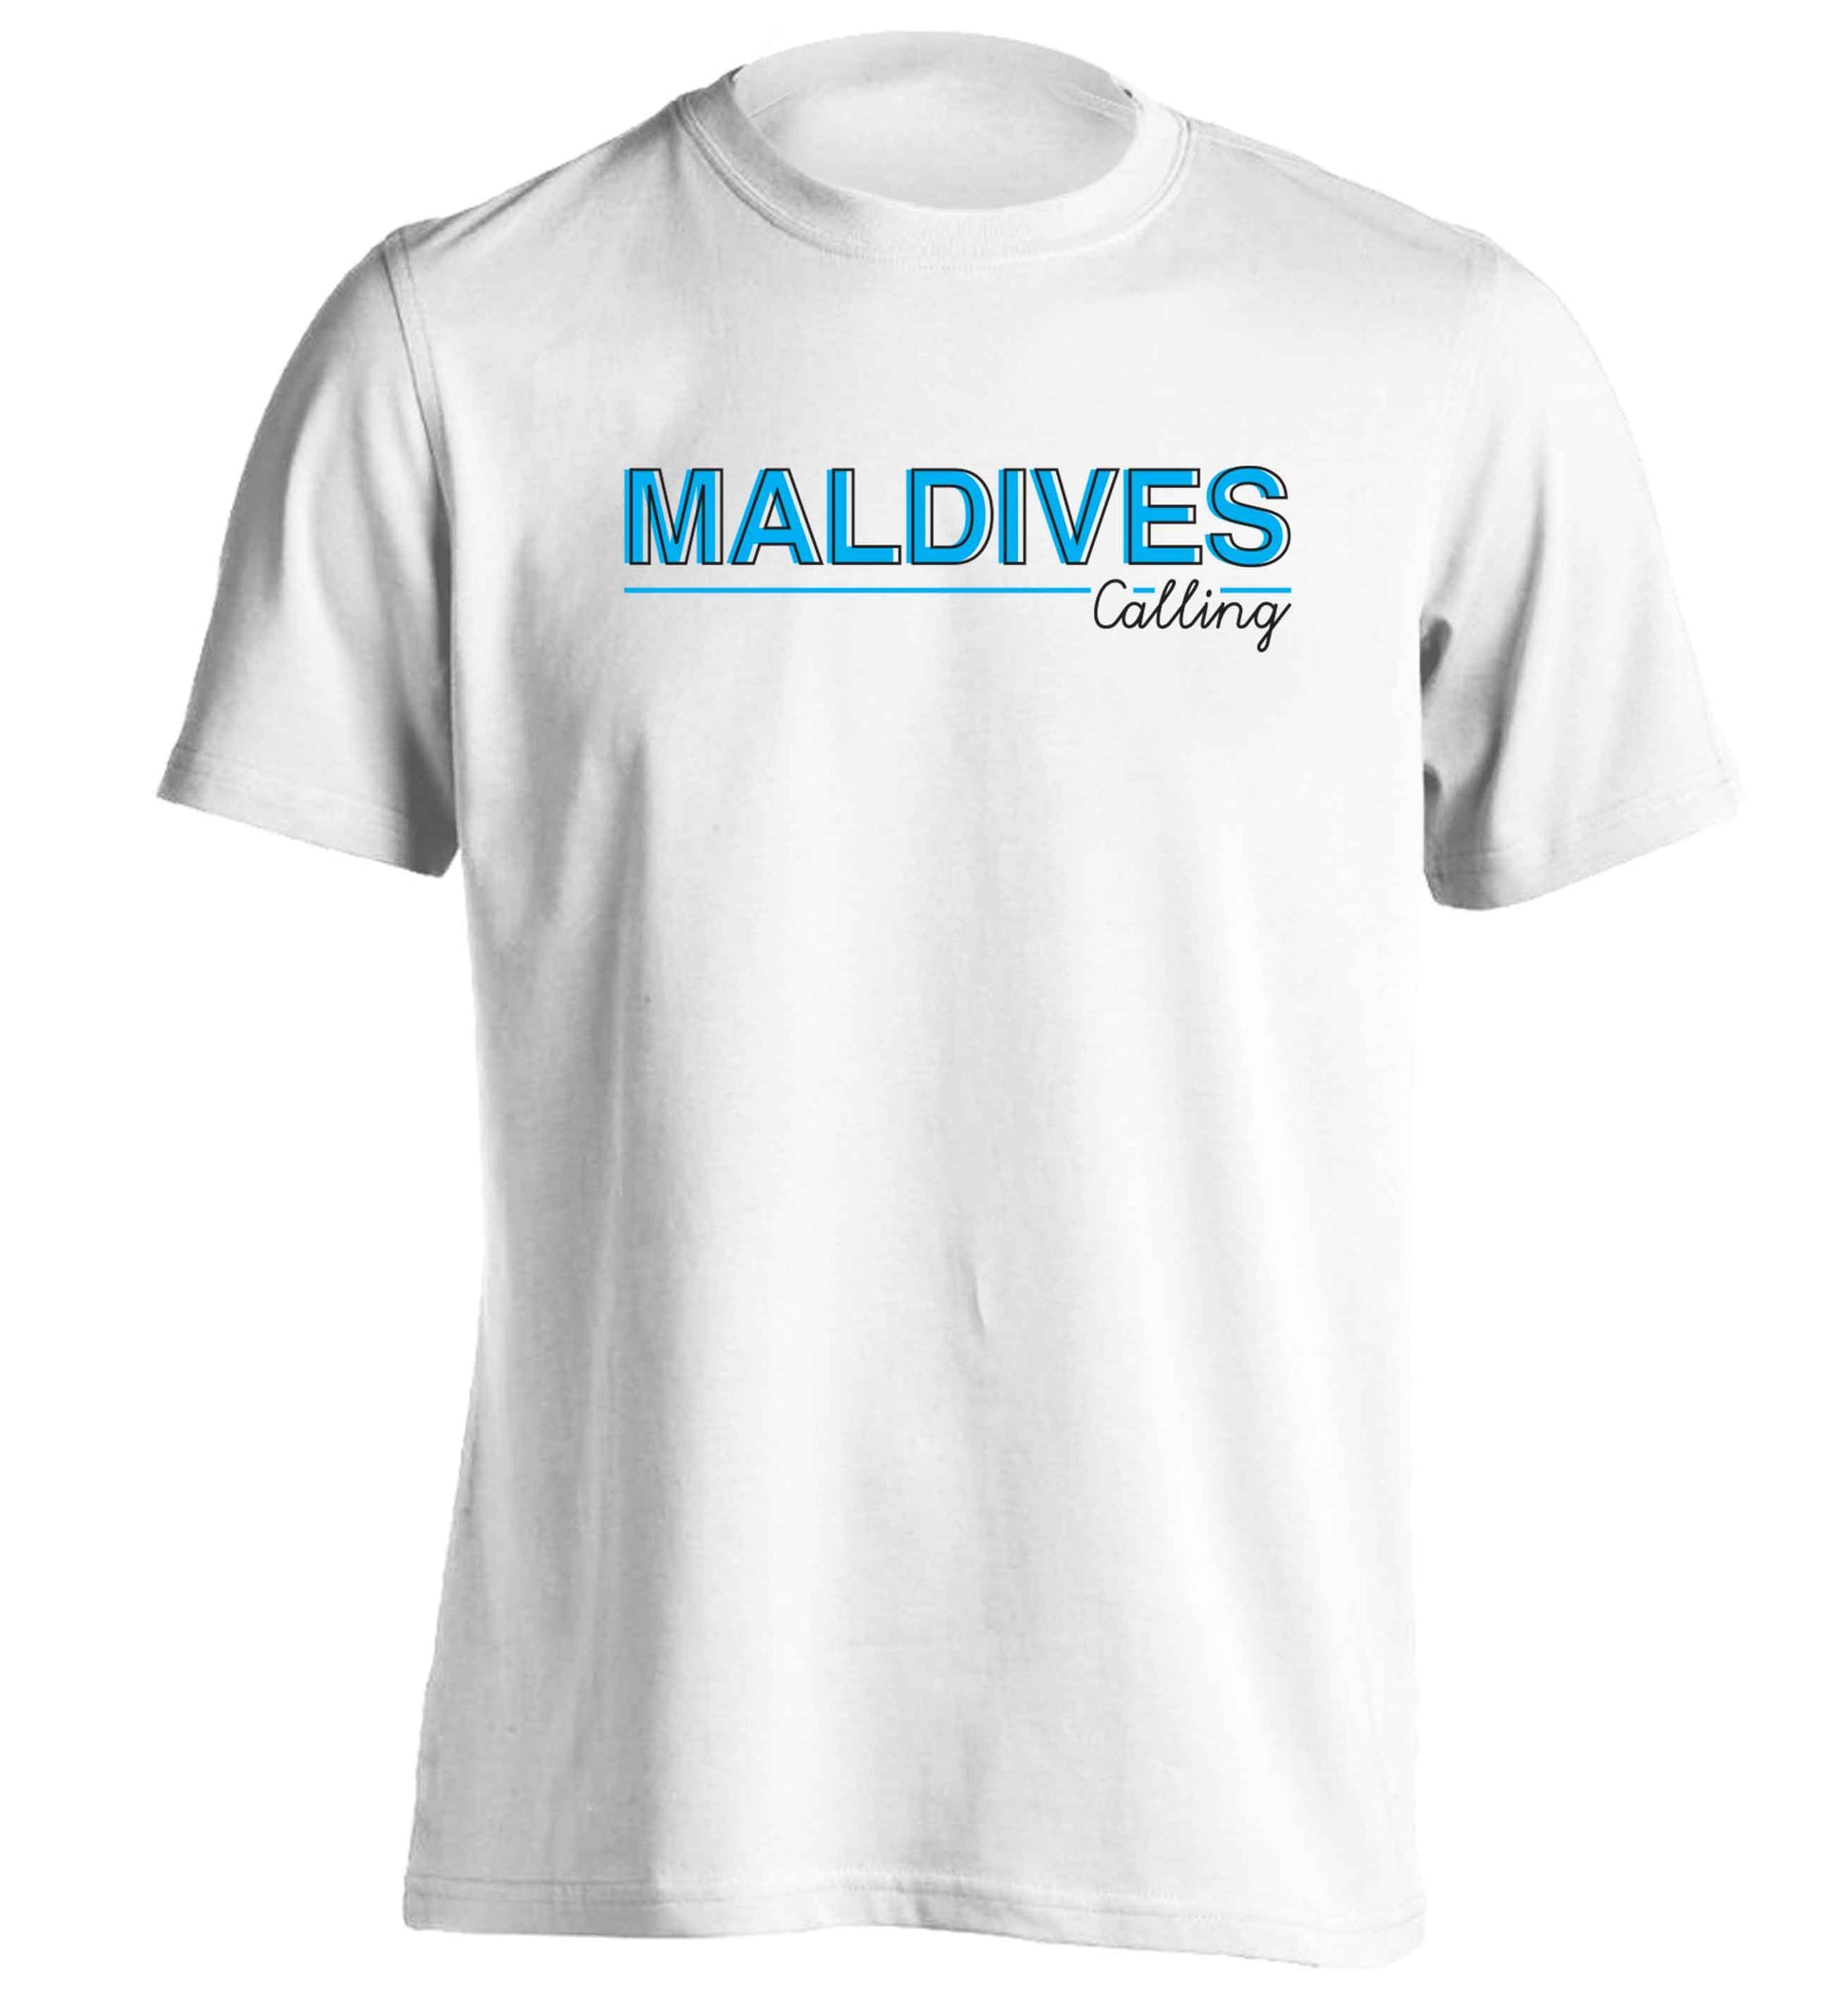 Maldives calling adults unisex white Tshirt 2XL